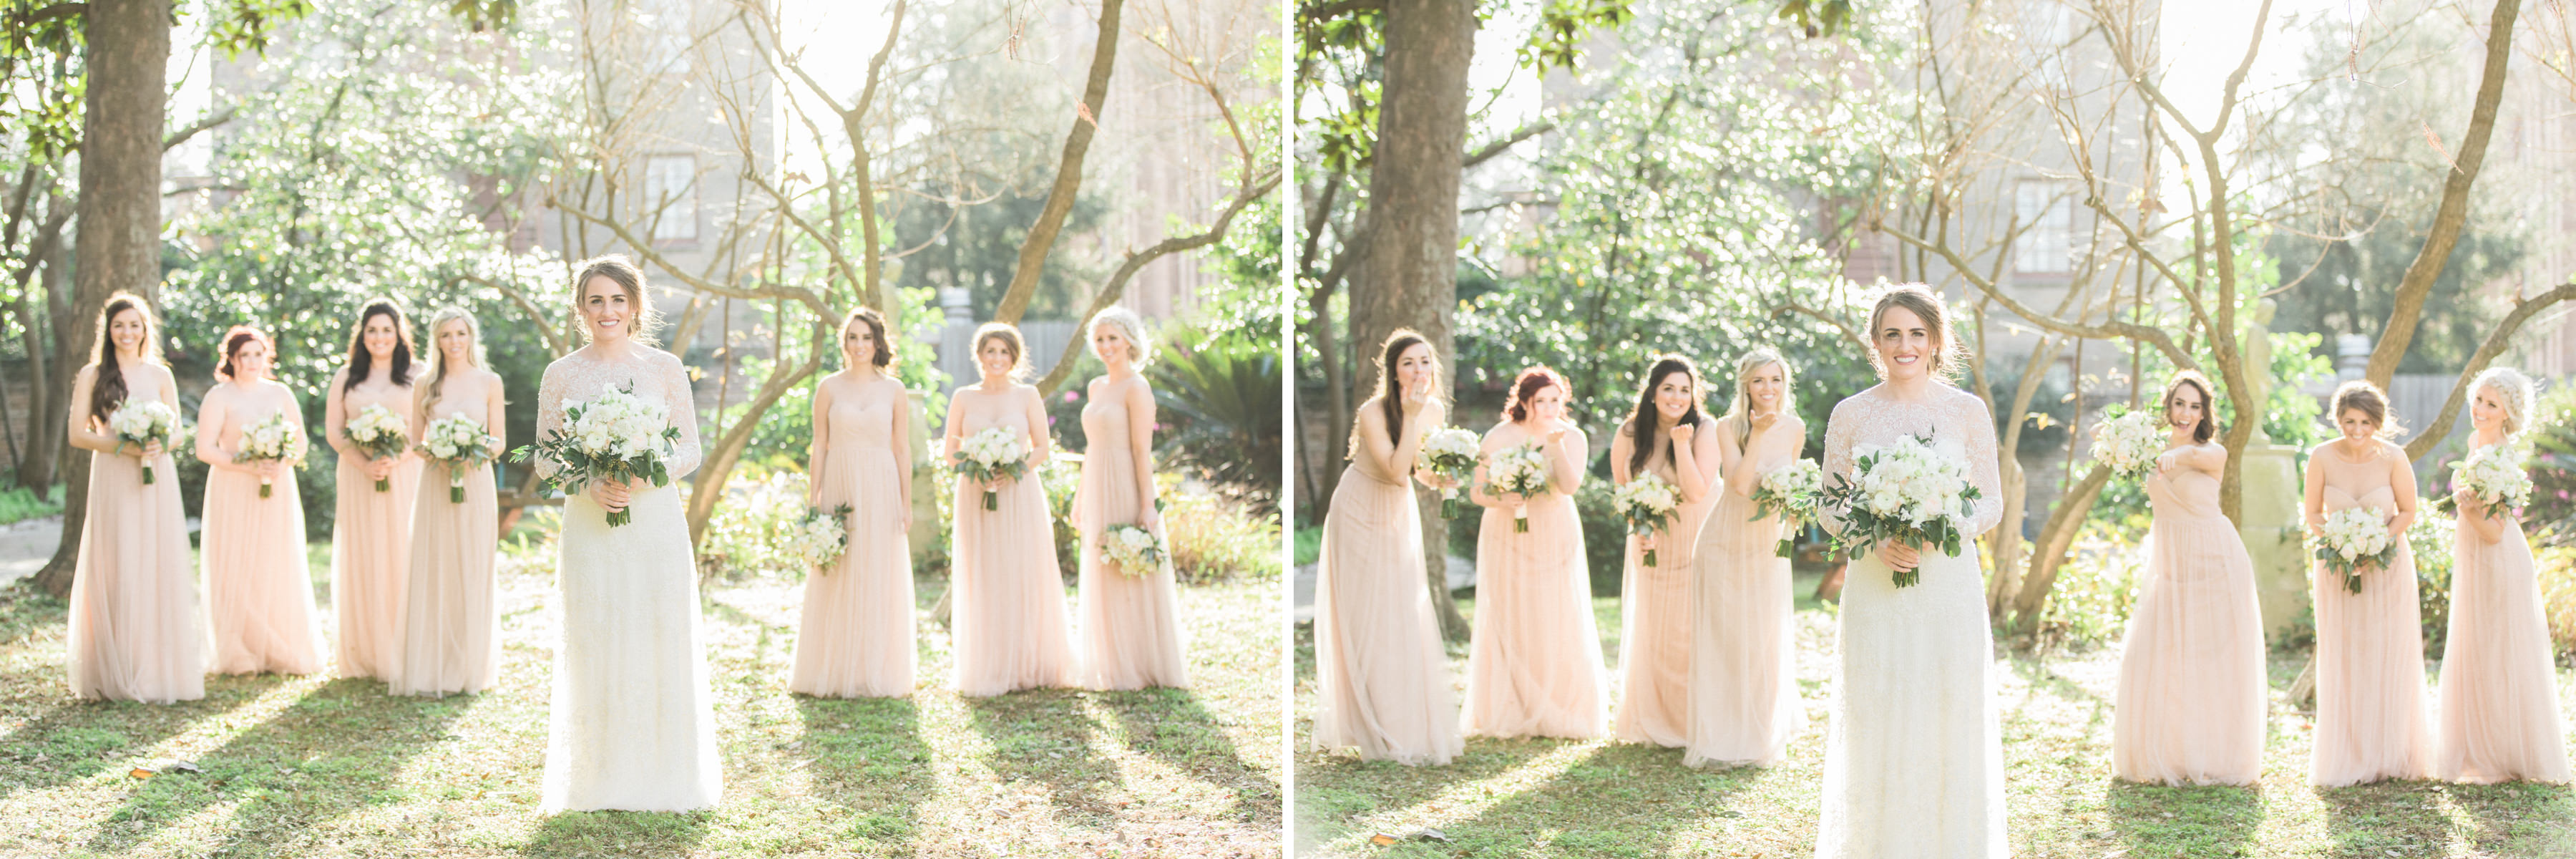 MULLET_WEDDING_NEW_ORLEANS_LOUISIANA_WEDDING_PHOTOGRAPHY_65